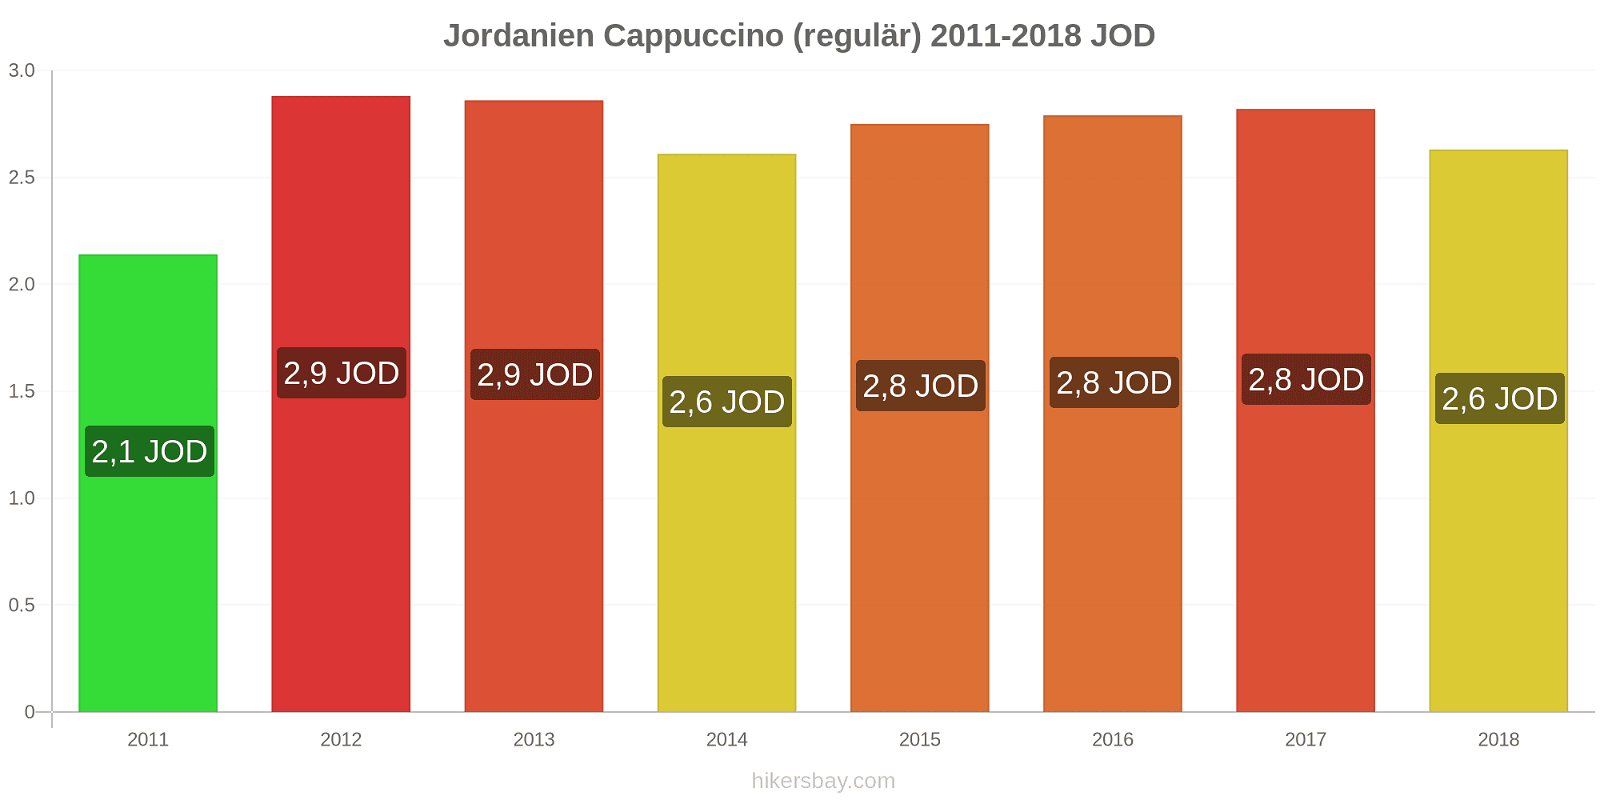 Jordanien Preisänderungen Cappuccino (regulär) hikersbay.com